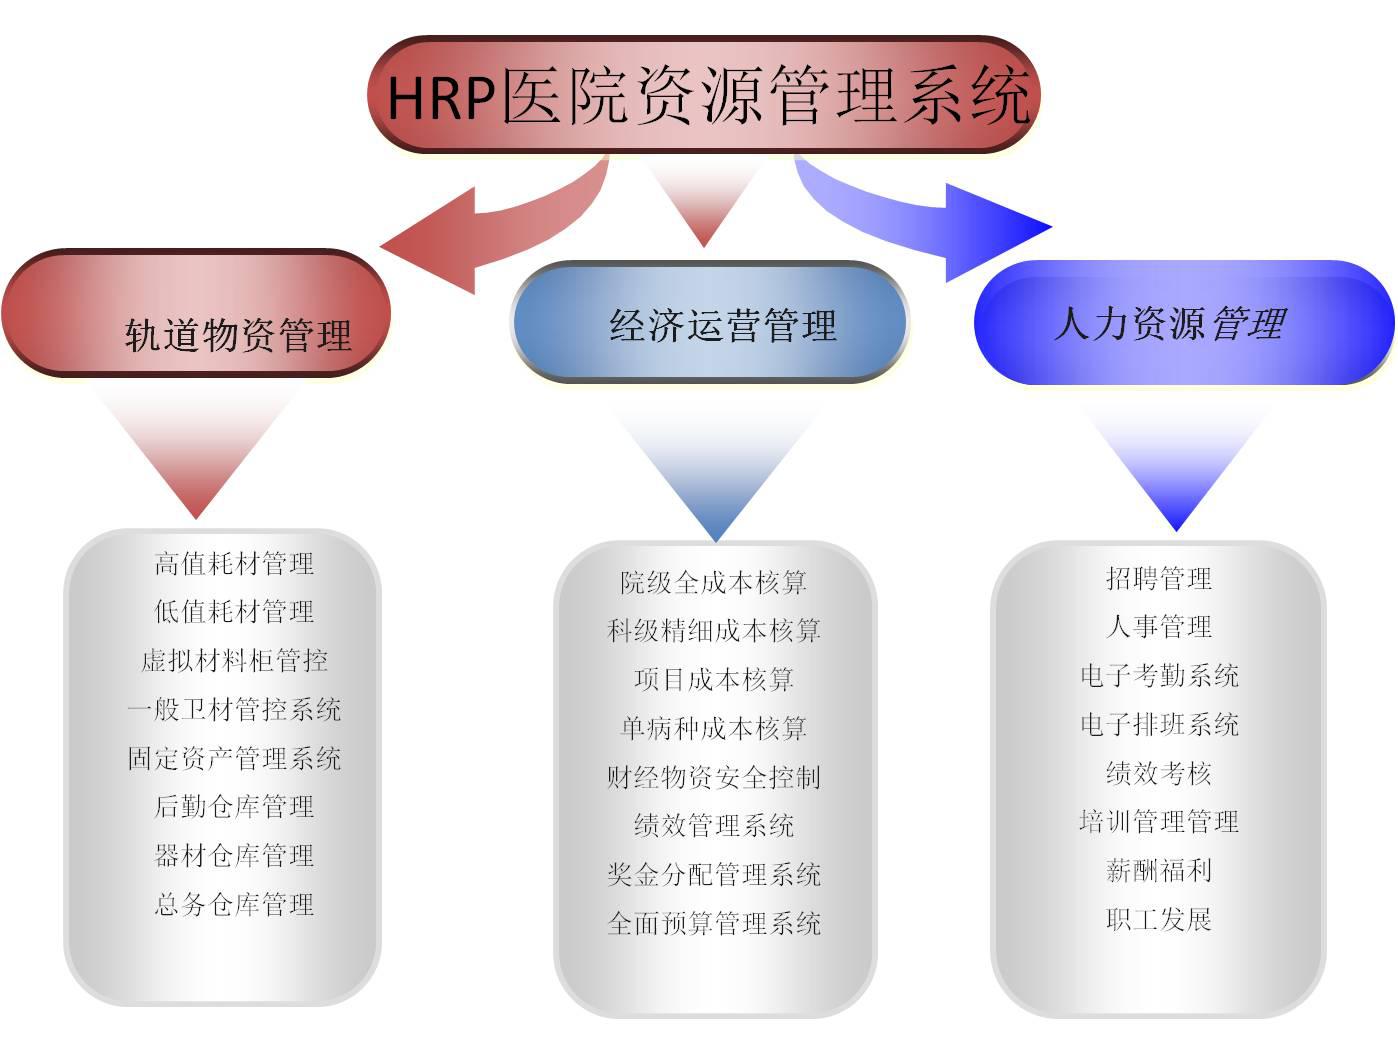 HRP(HR partner)